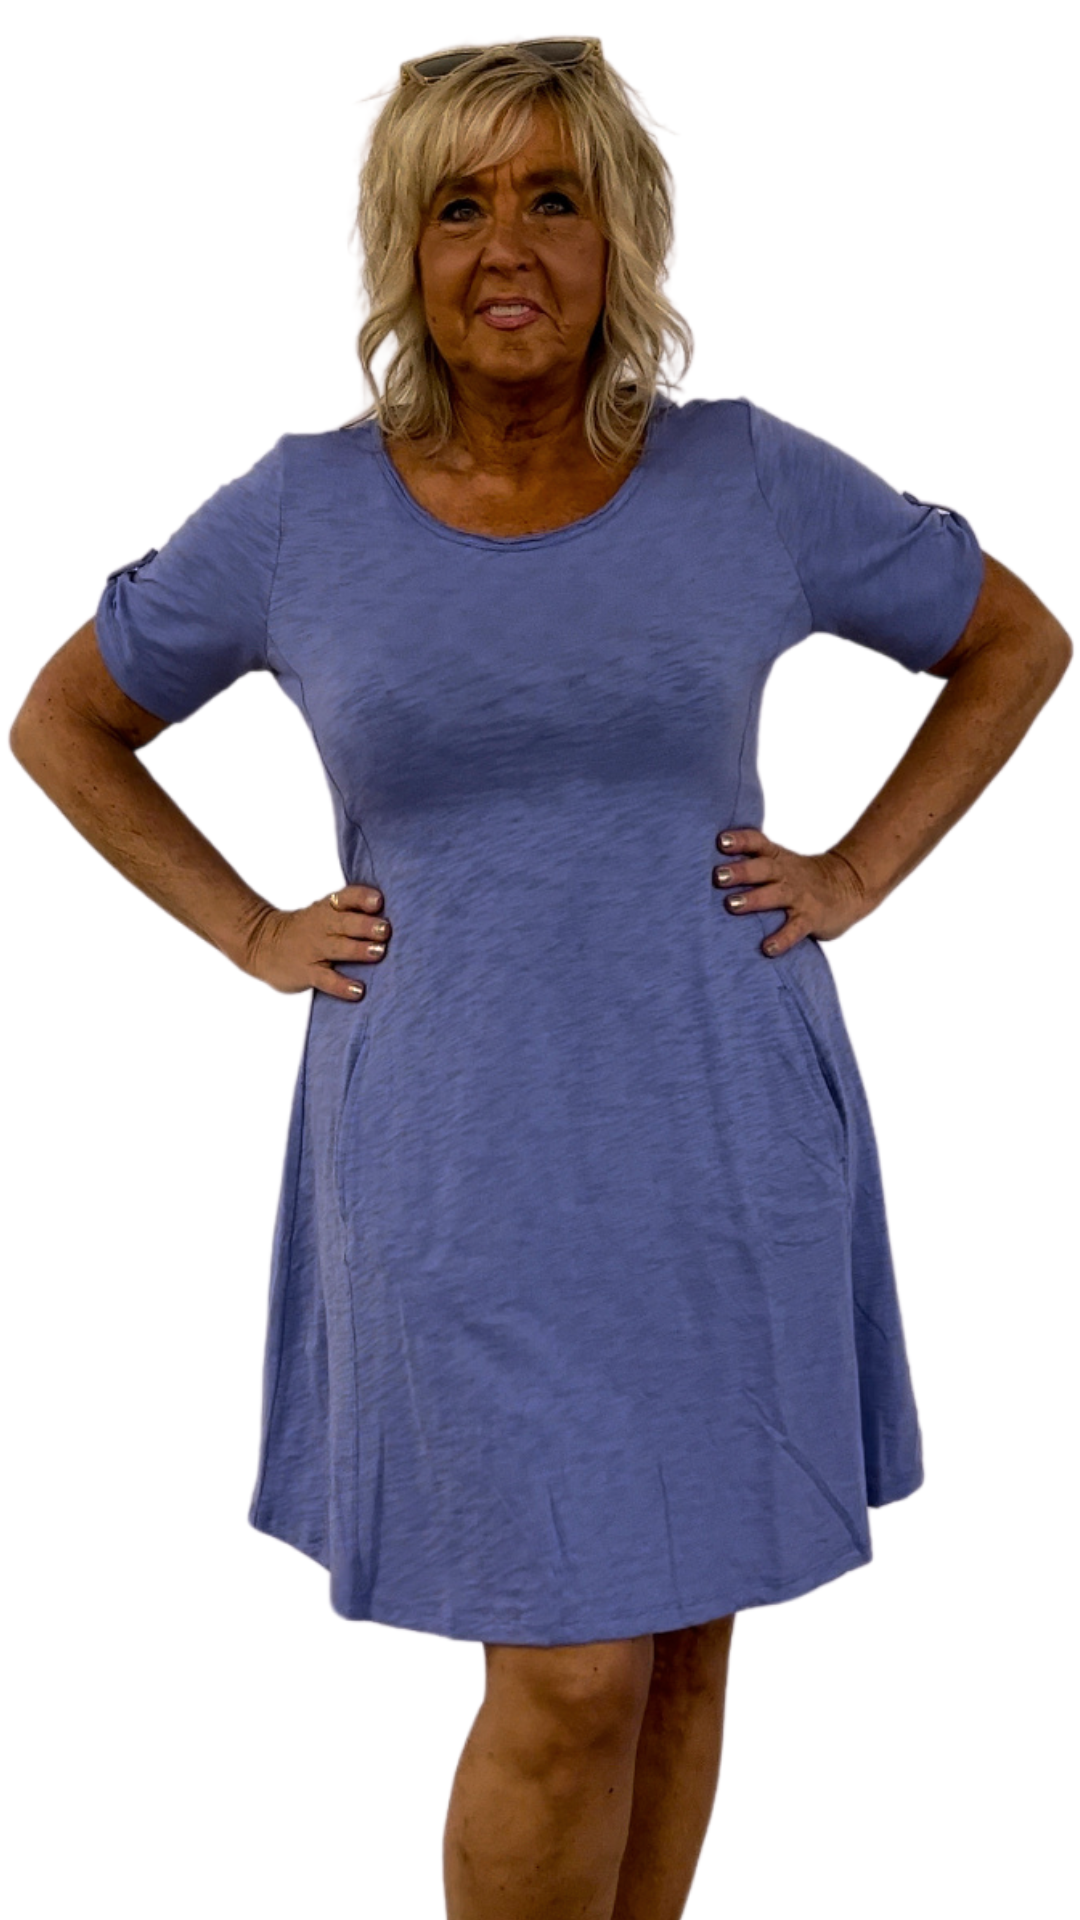 Short Sleeve Side Pocket T-Shirt Dress. Style ESC80010